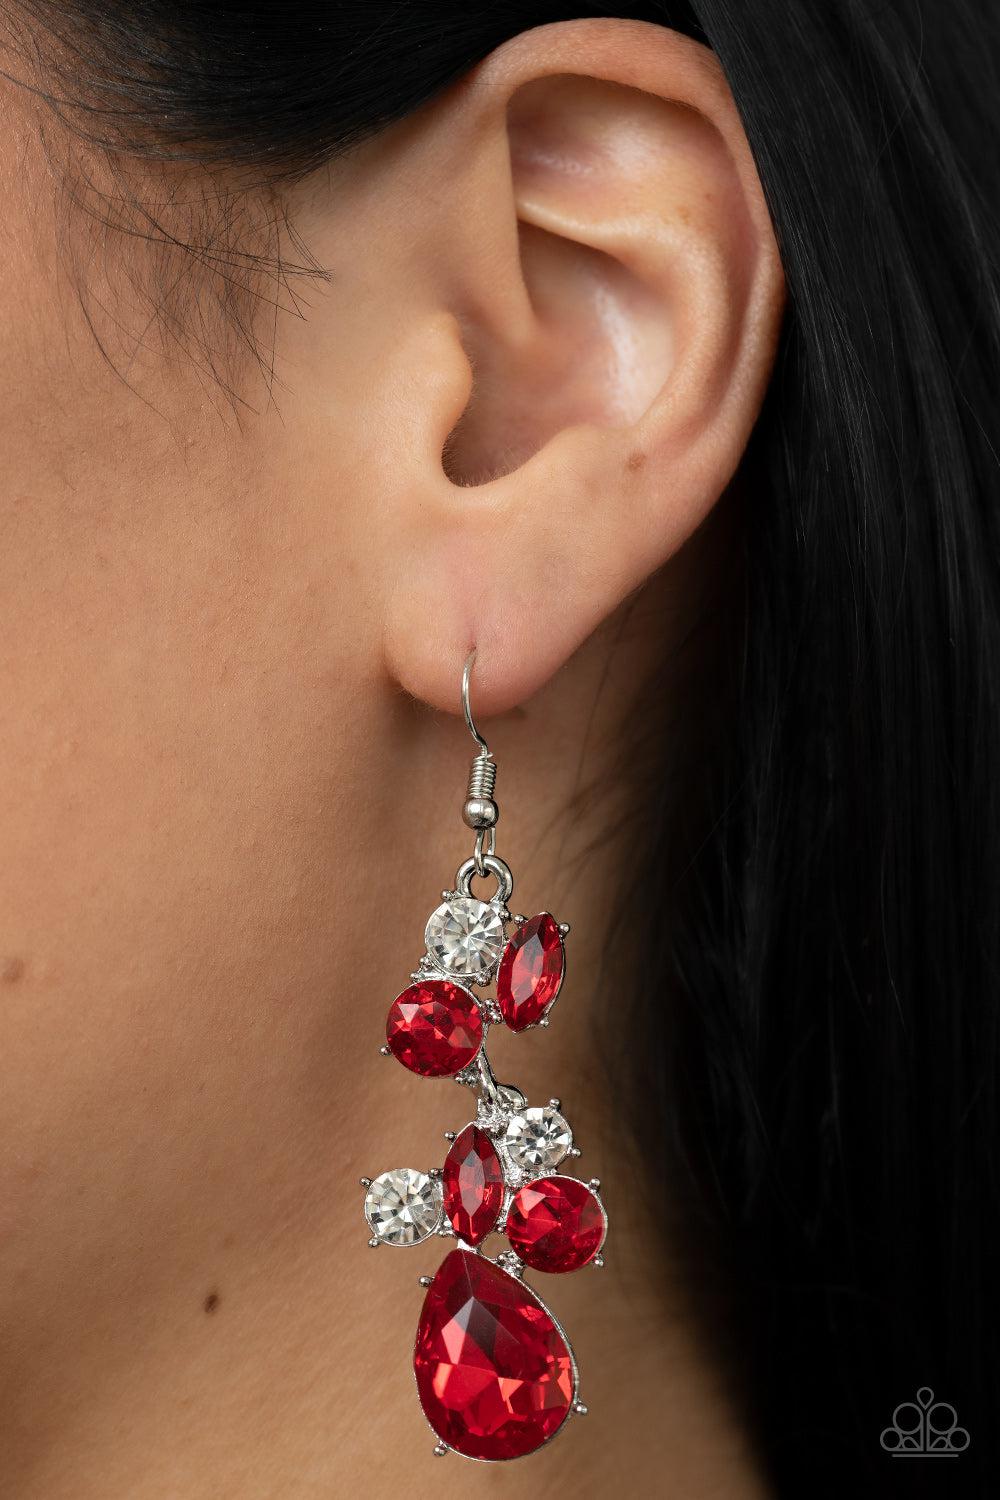 Rhinestone Reveler Red Earrings - Paparazzi Accessories- lightbox - CarasShop.com - $5 Jewelry by Cara Jewels